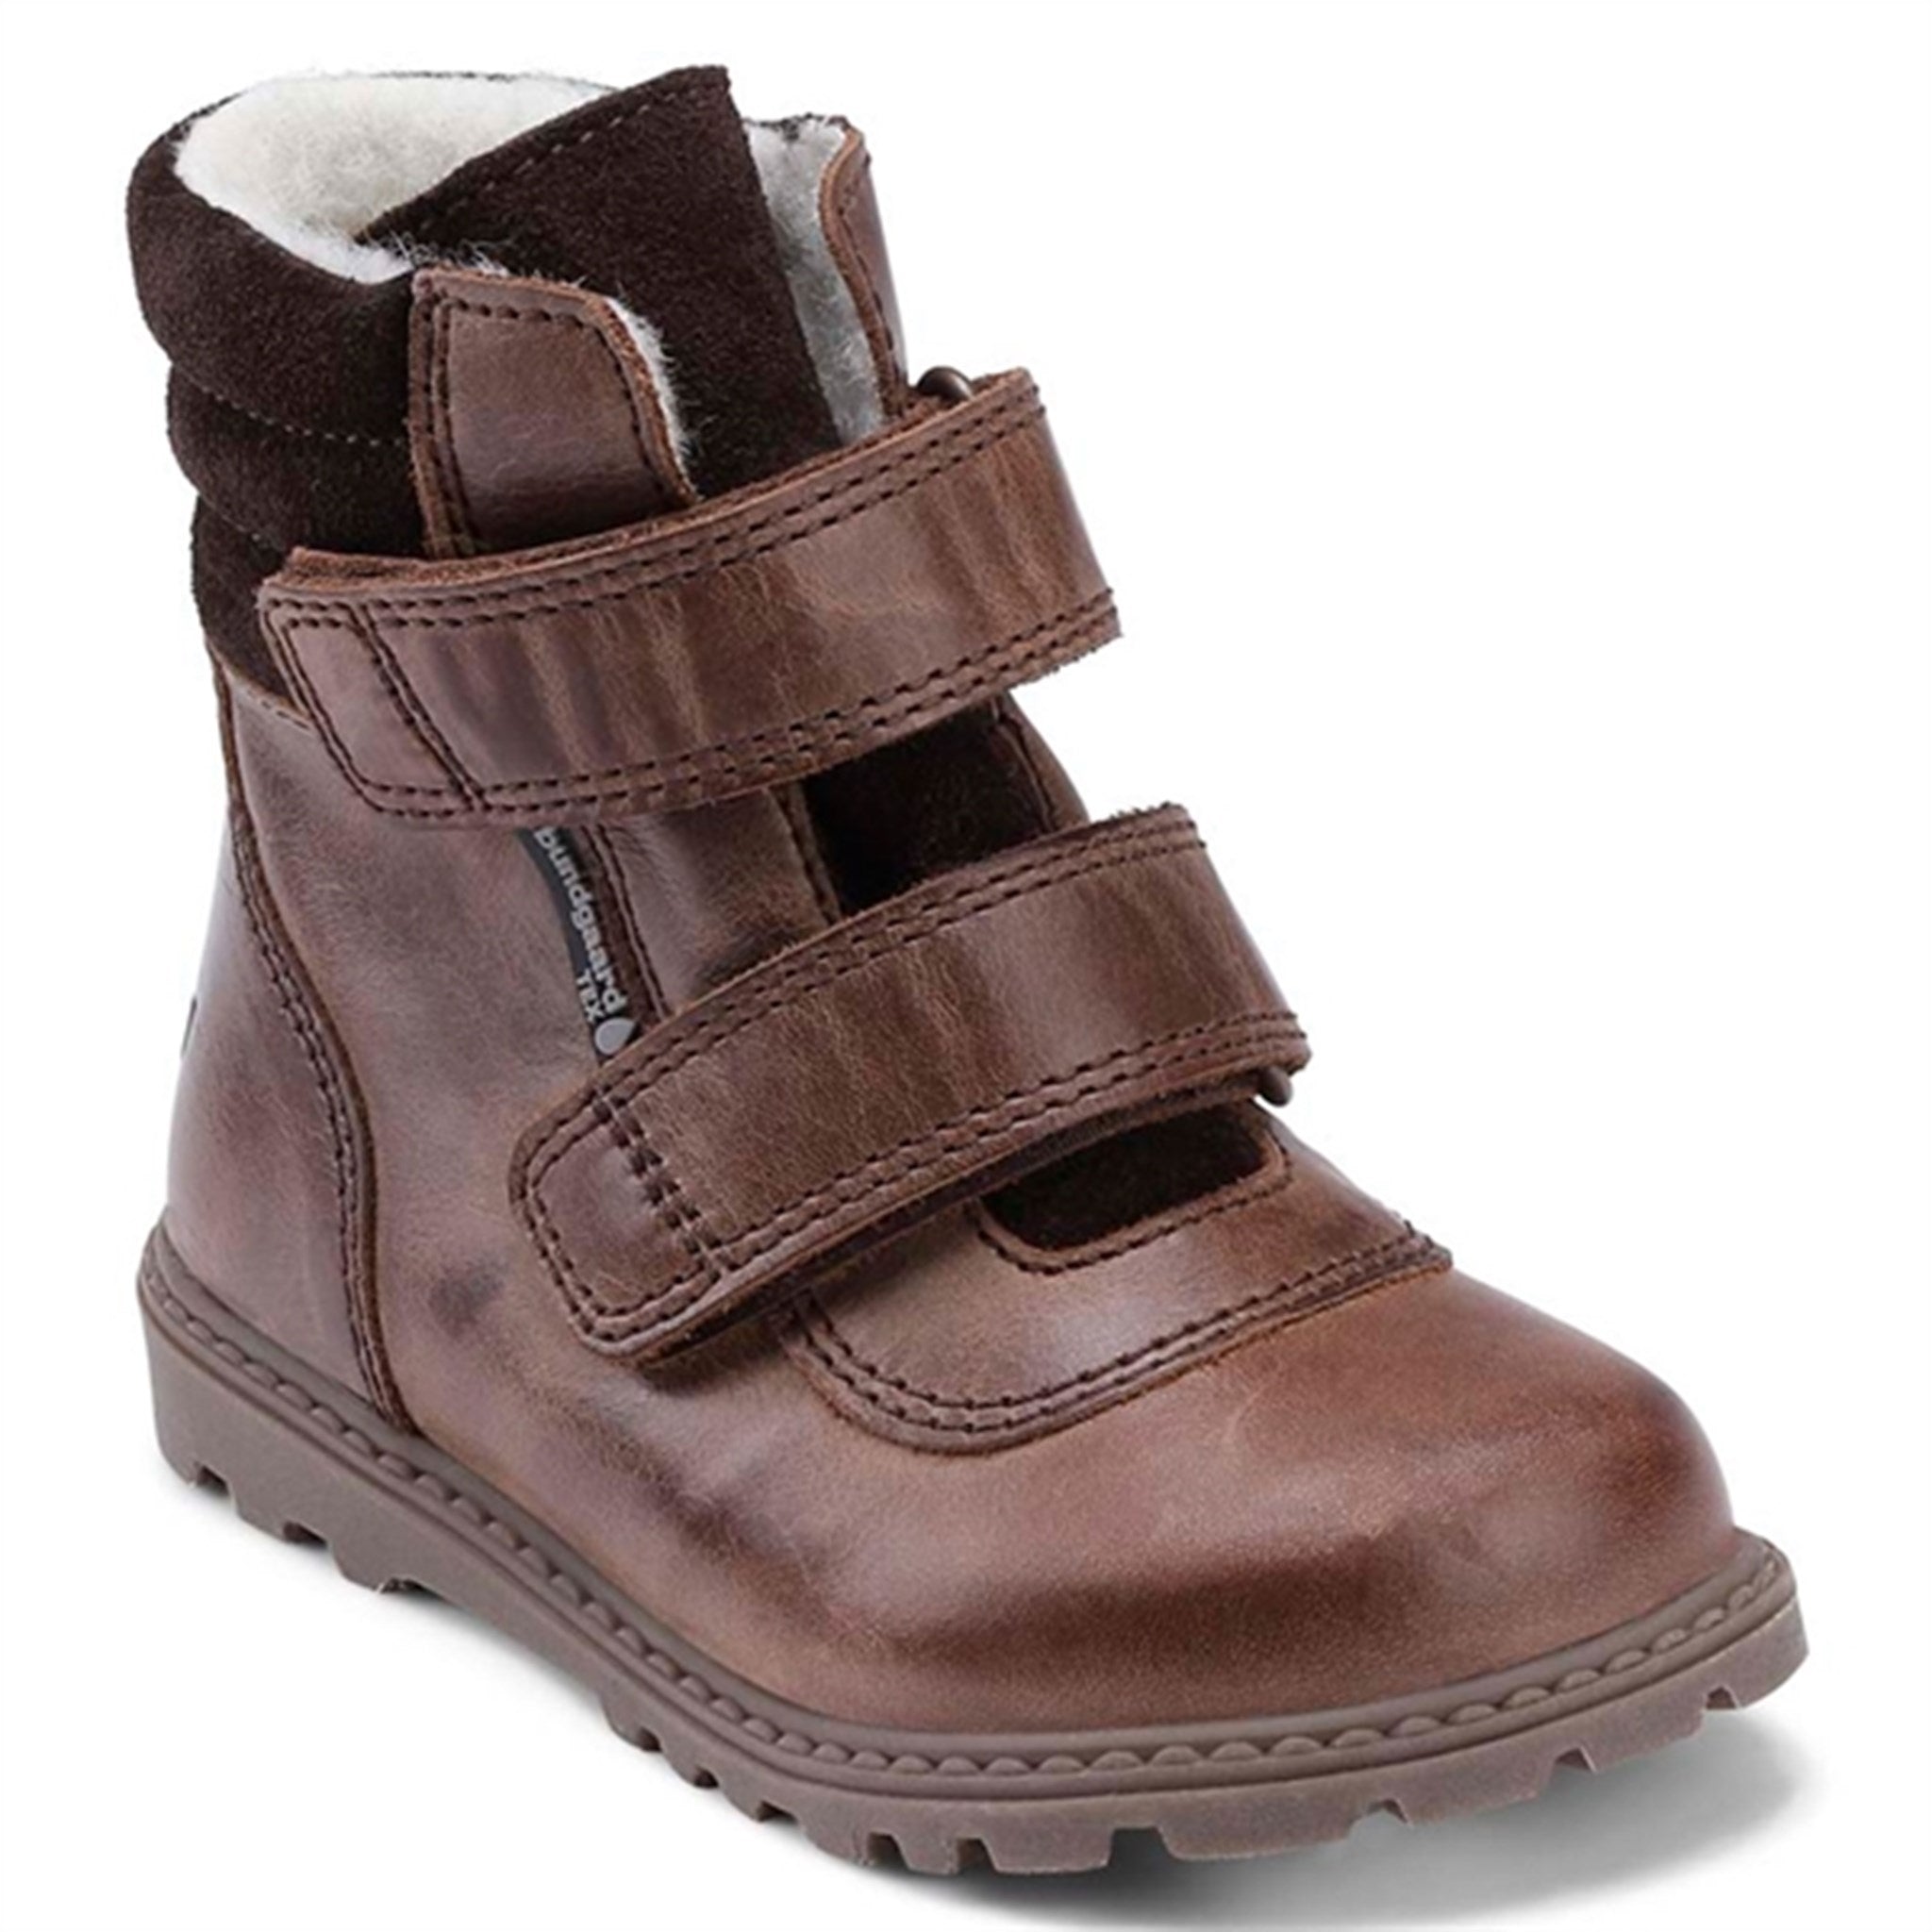 Bundgaard Tokker TEX Winter Boots Brown WS